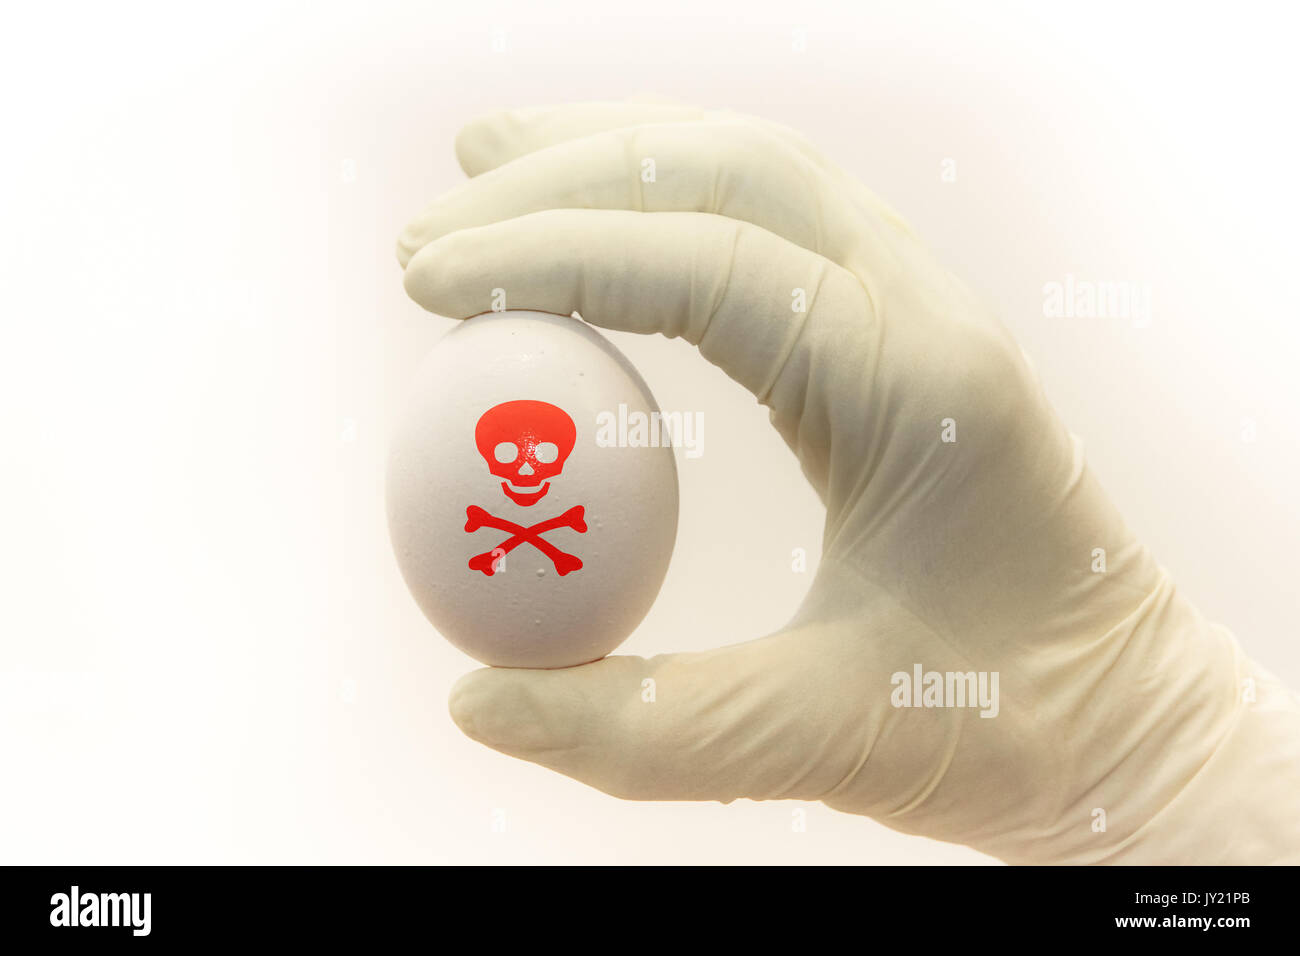 Huevo aisladas bajo investigación beig examinó con guantes quirúrgicos con un veneno peligroso símbolo pintados. Imagen concepto de contaminación de alimentos Foto de stock